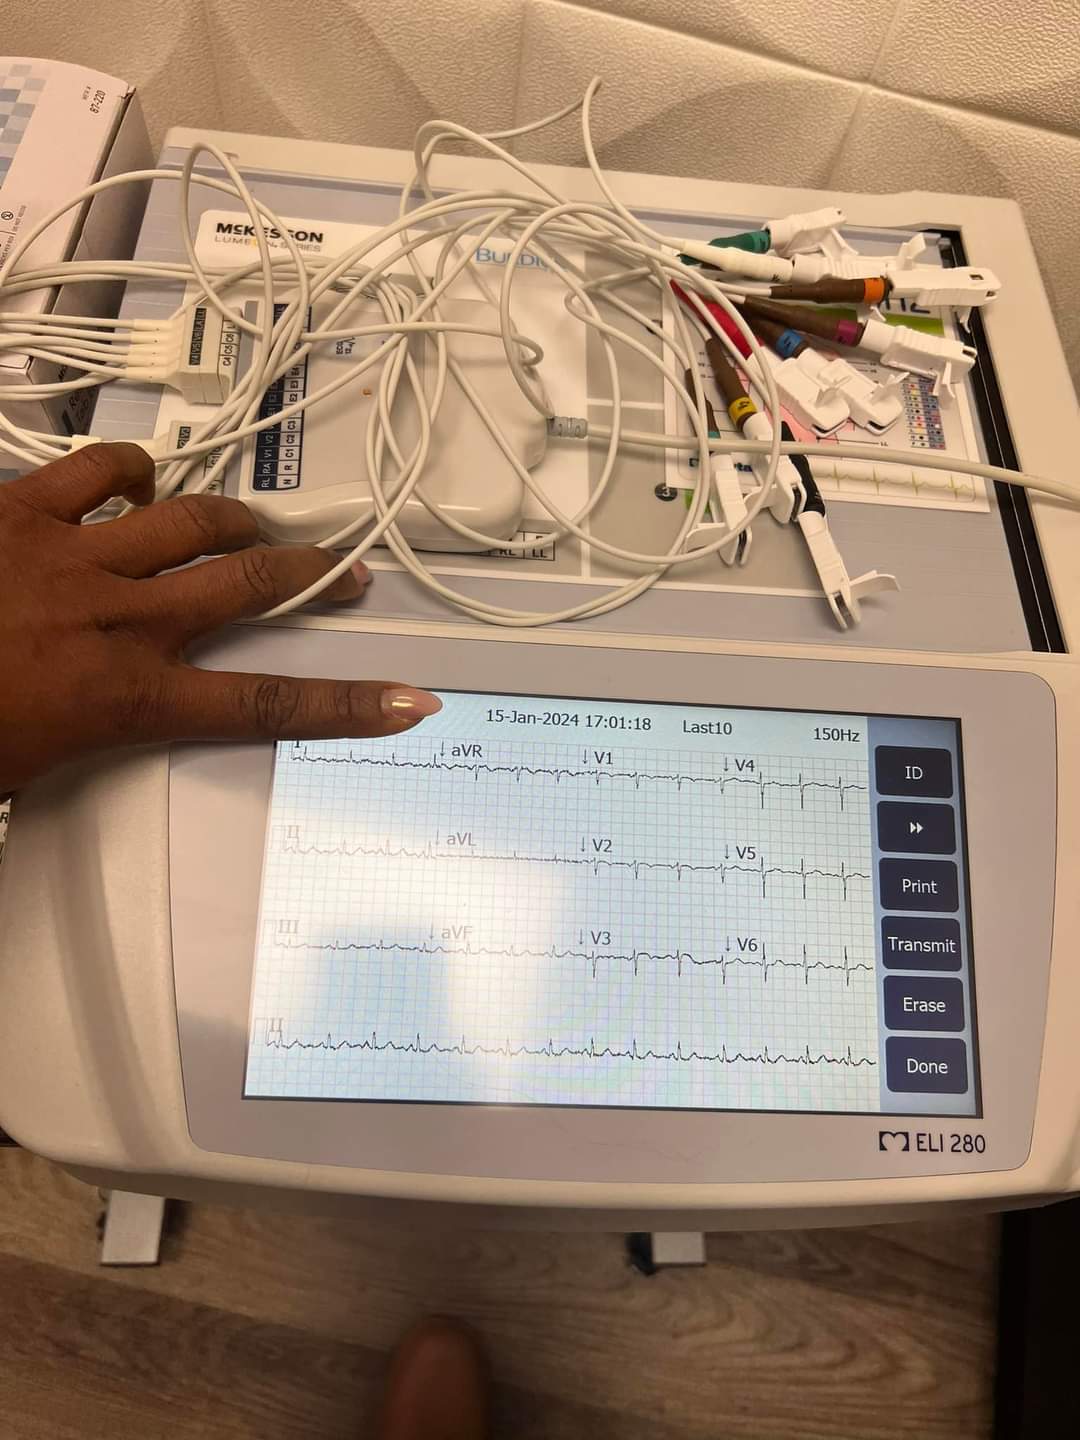 Elite NP has great faith in her new EKG machine's ability to interpret EKGs